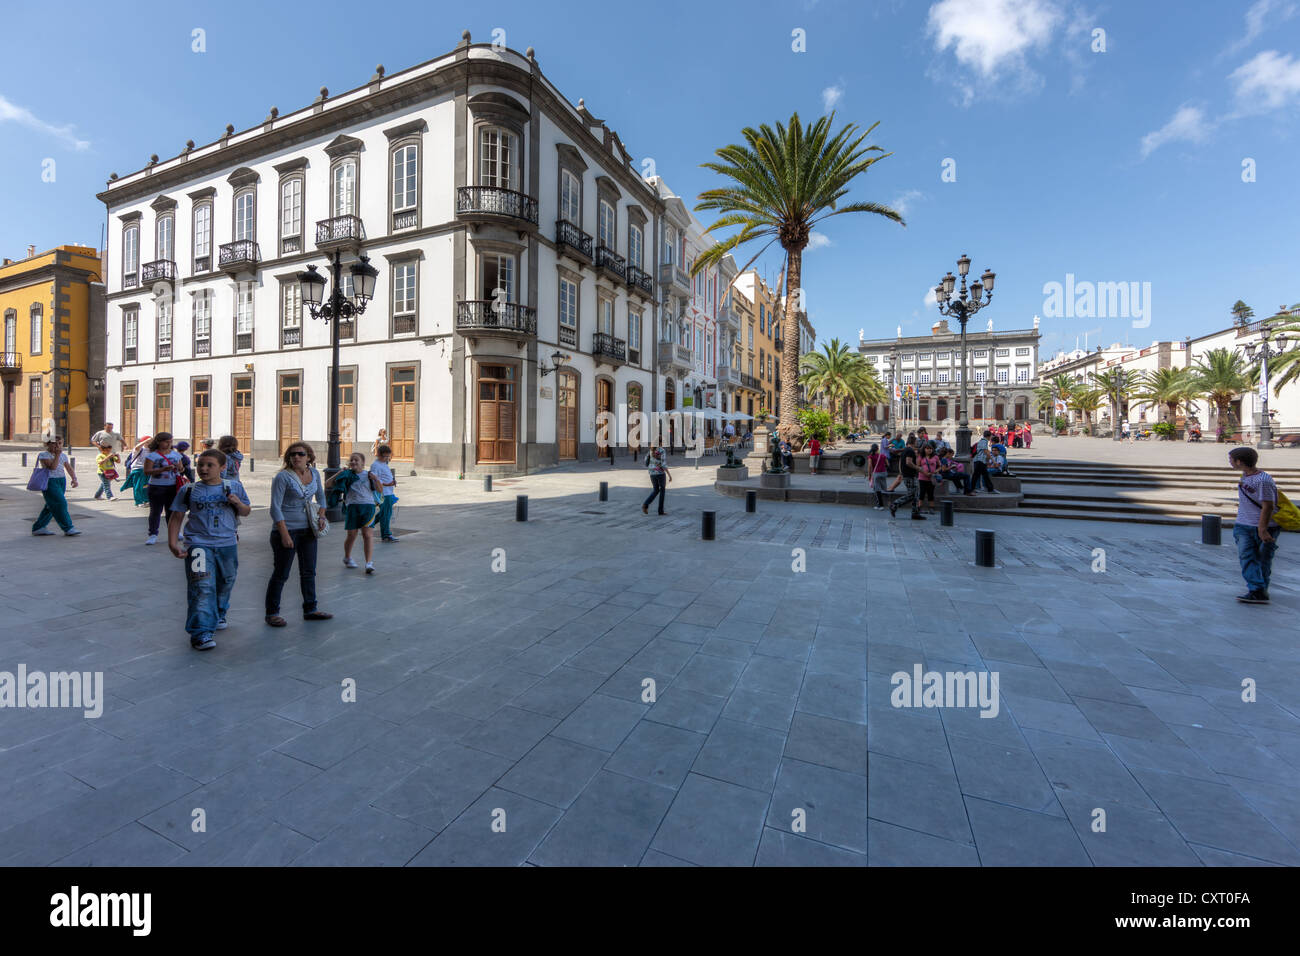 La place Plaza Santa Ana, centre-ville historique de Las Palmas, Las Palmas de Gran Canaria, Gran Canaria, Îles Canaries, Espagne Banque D'Images